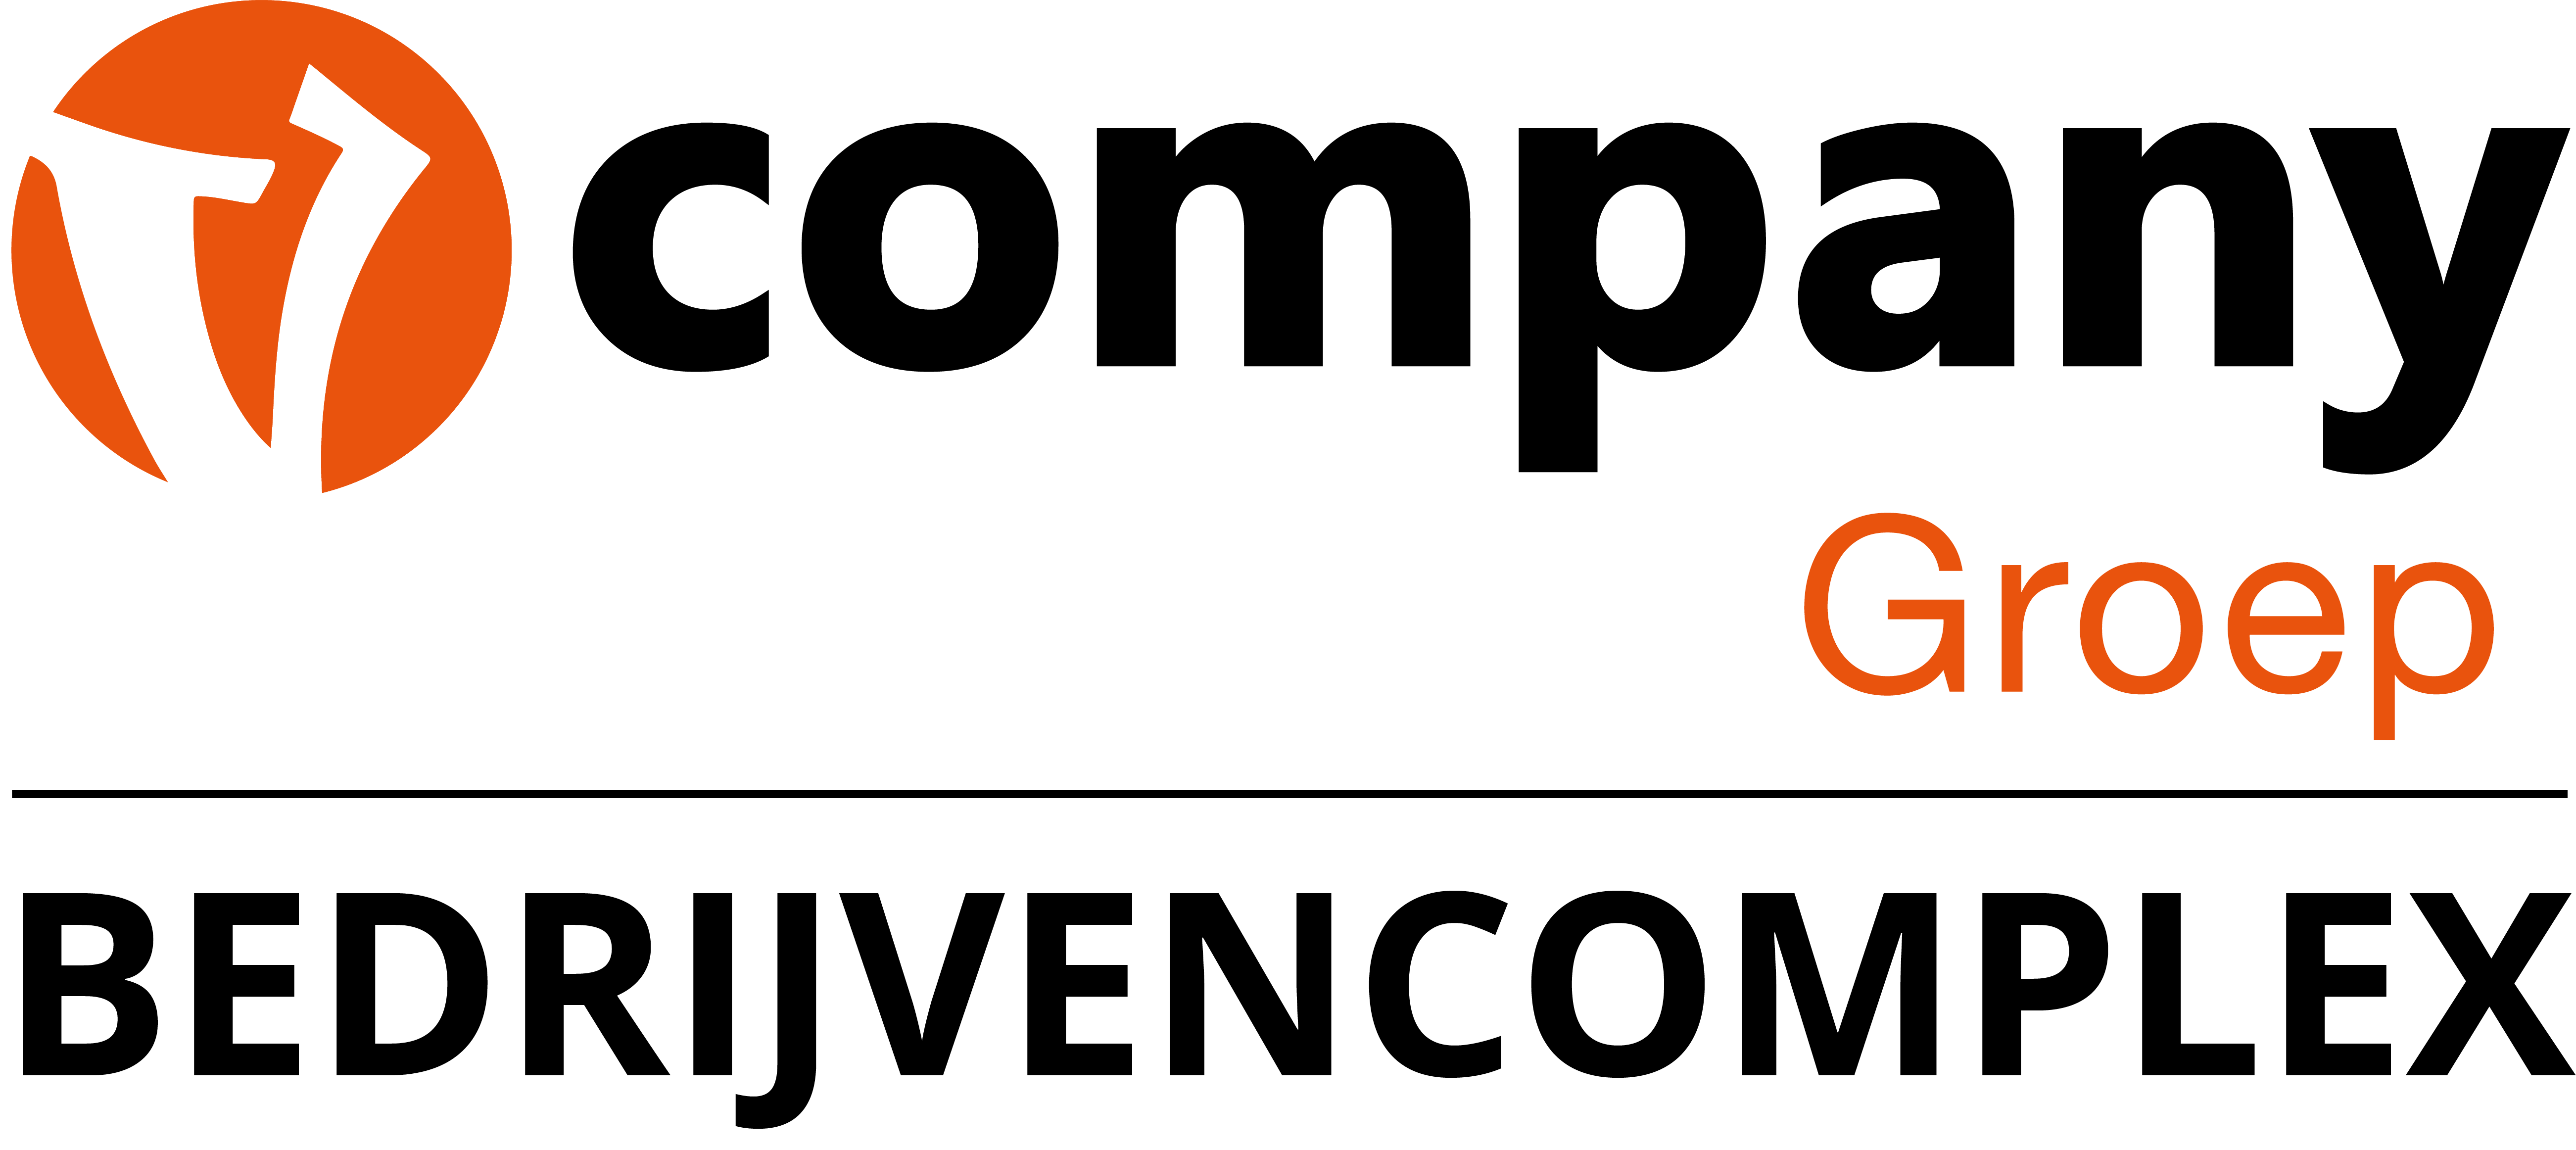 Bedrijvencomplex Logo